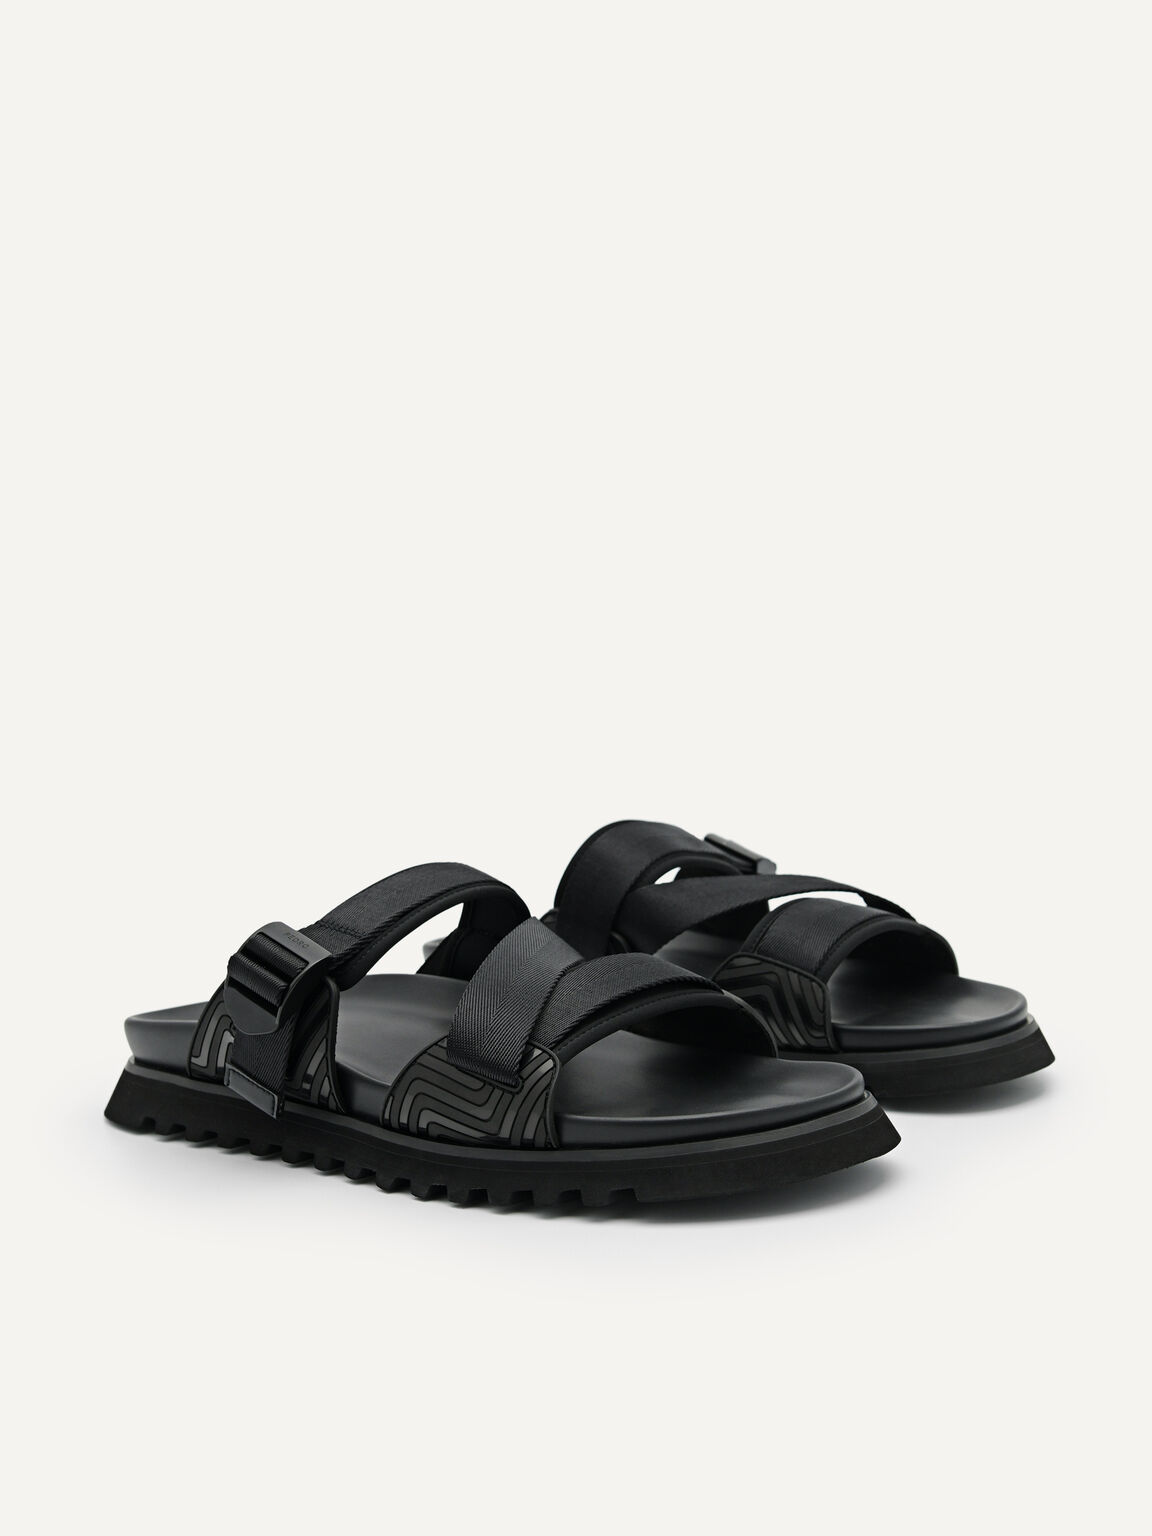 Nylon Strap Sandals, Black, hi-res